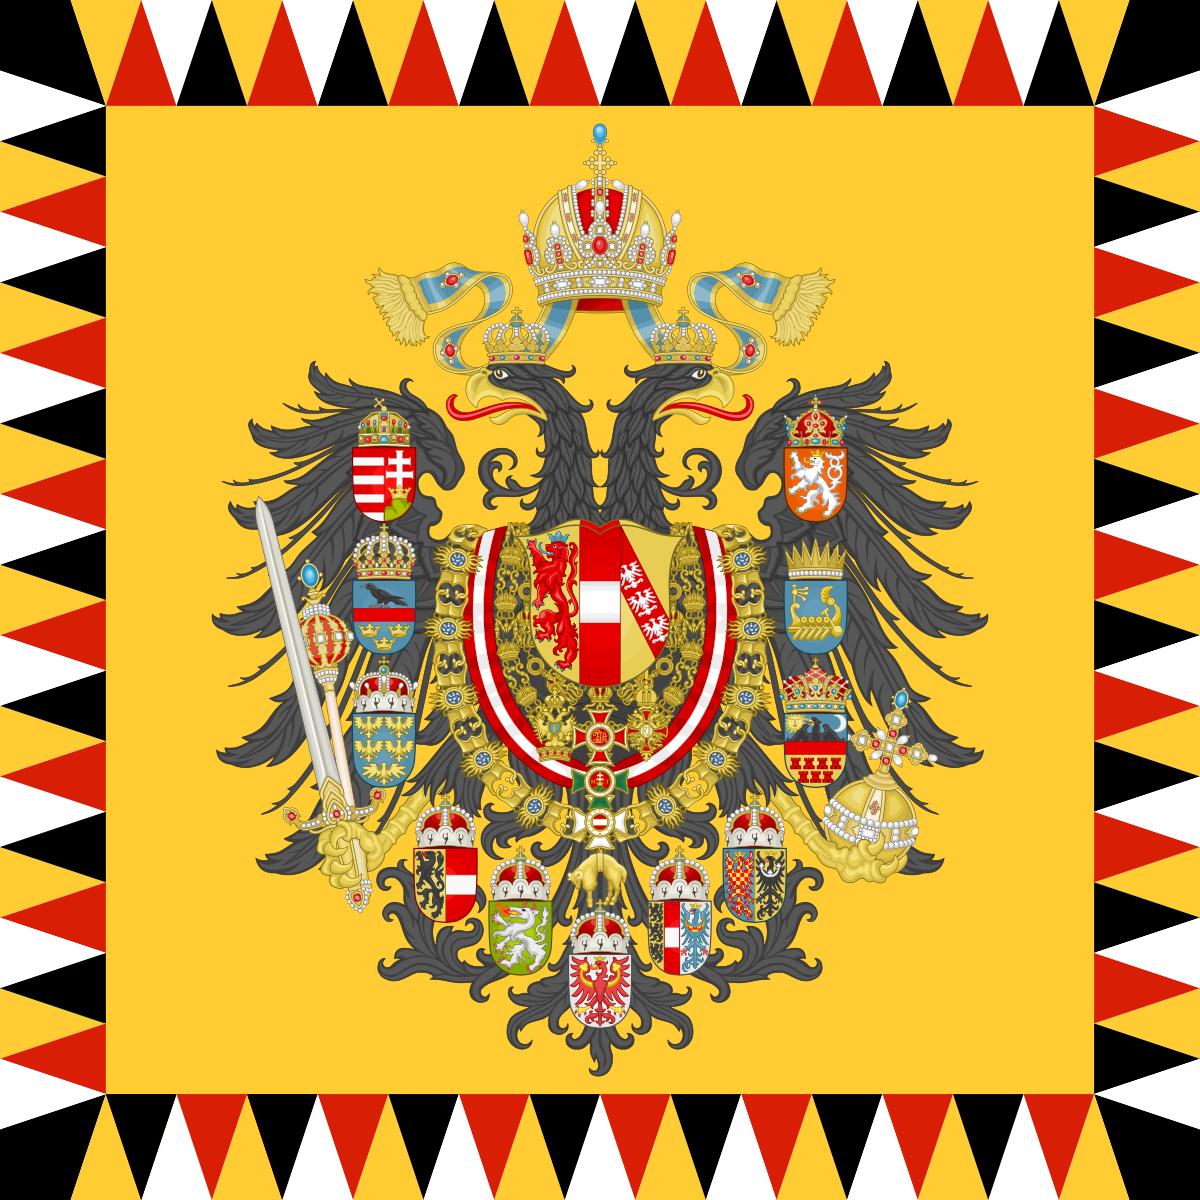 austria hungary flag during world war 1